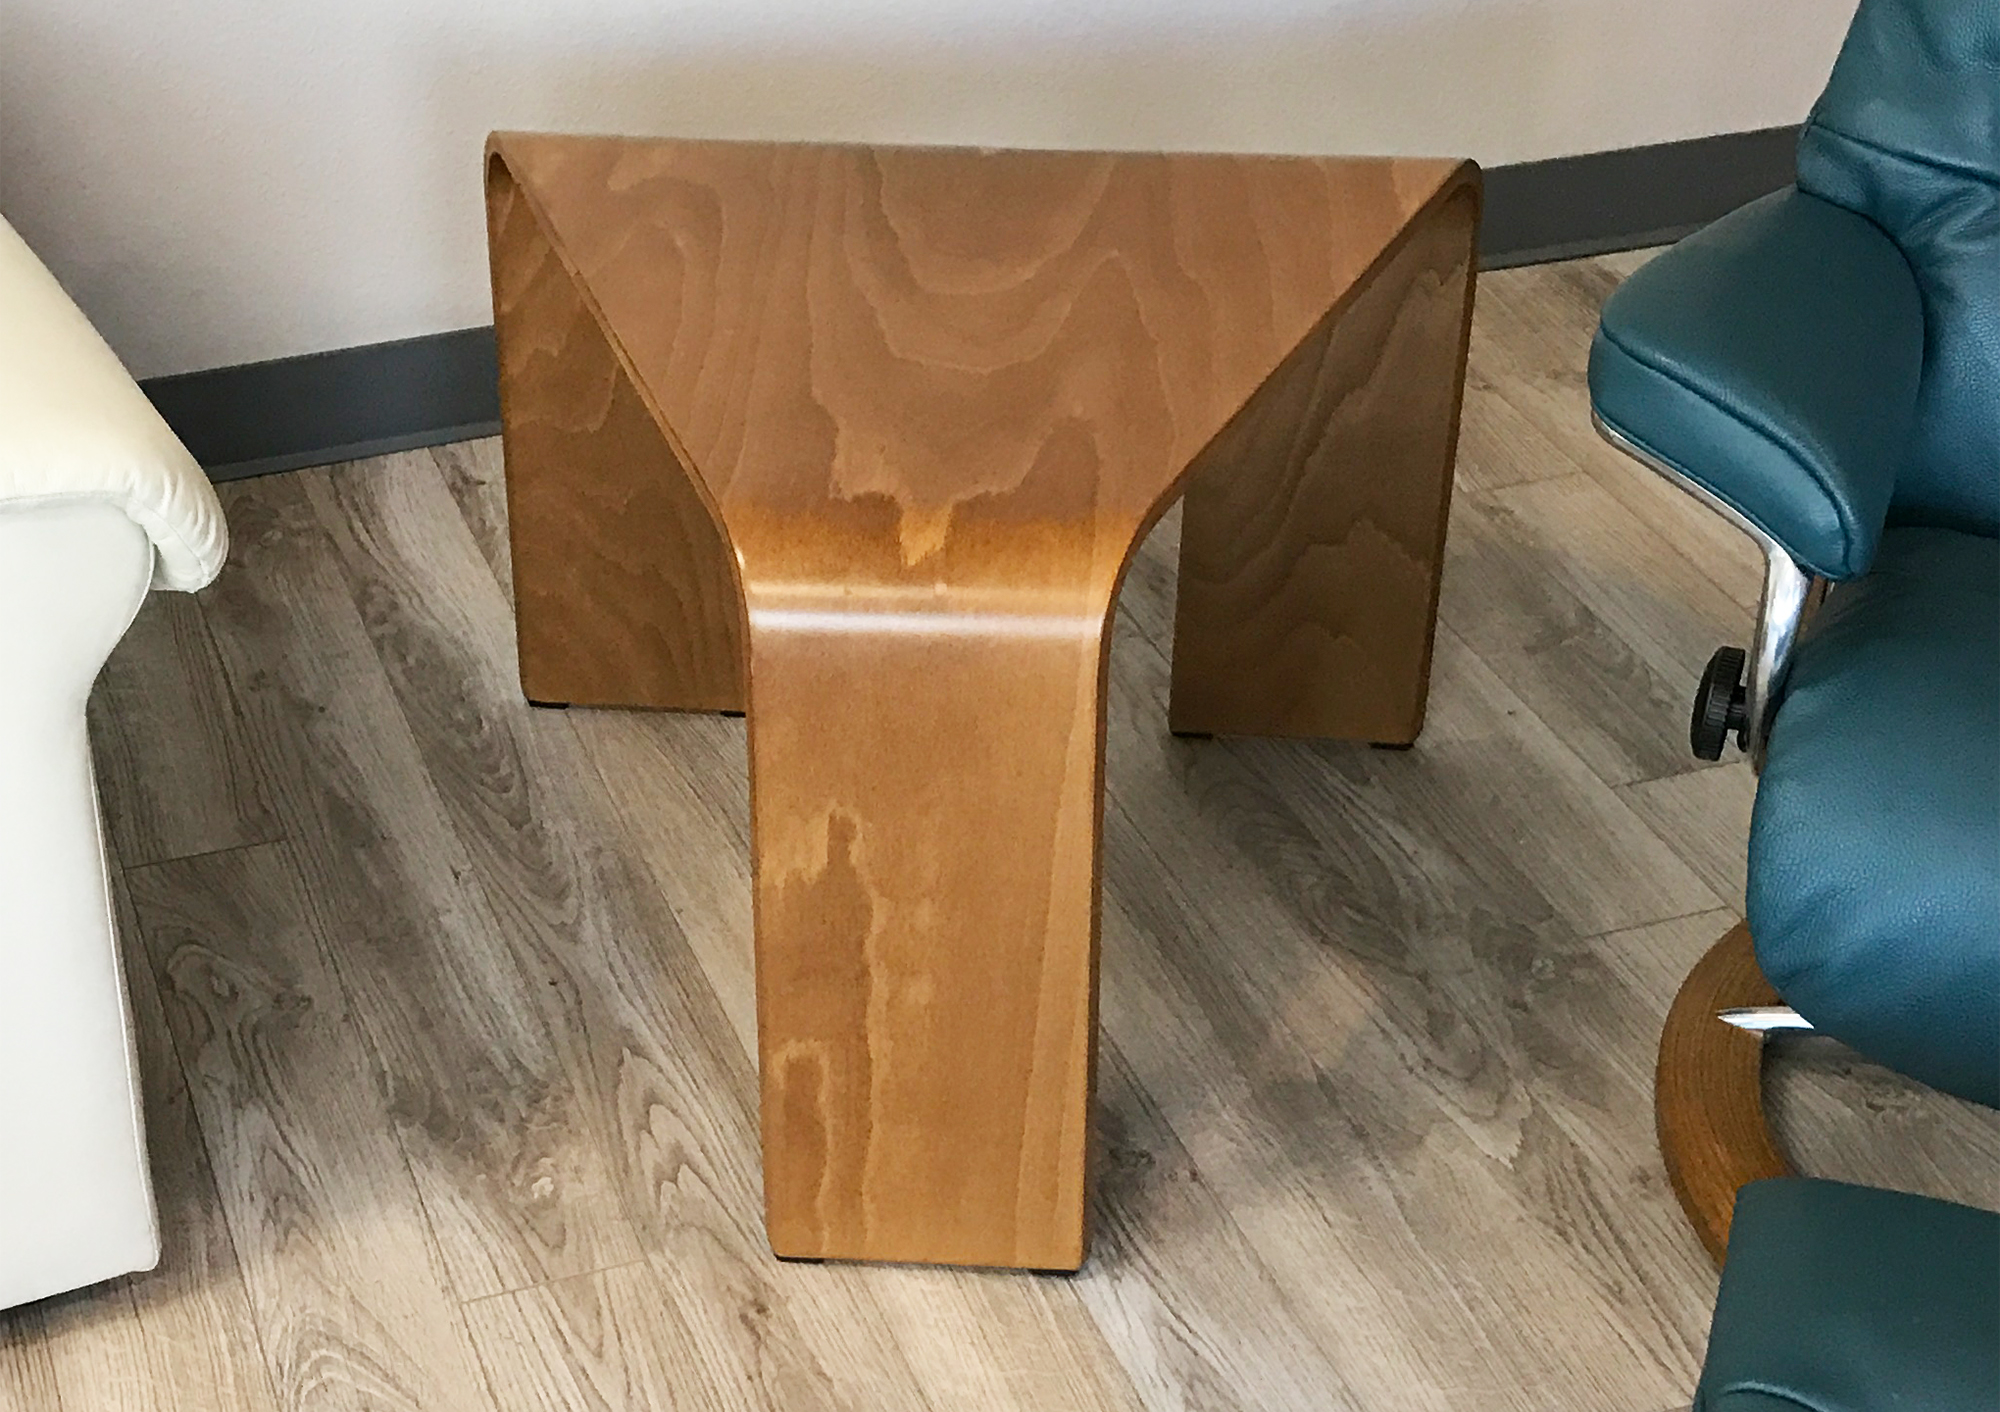 Stressless Corner Wood Stain Side Table By Ekornes